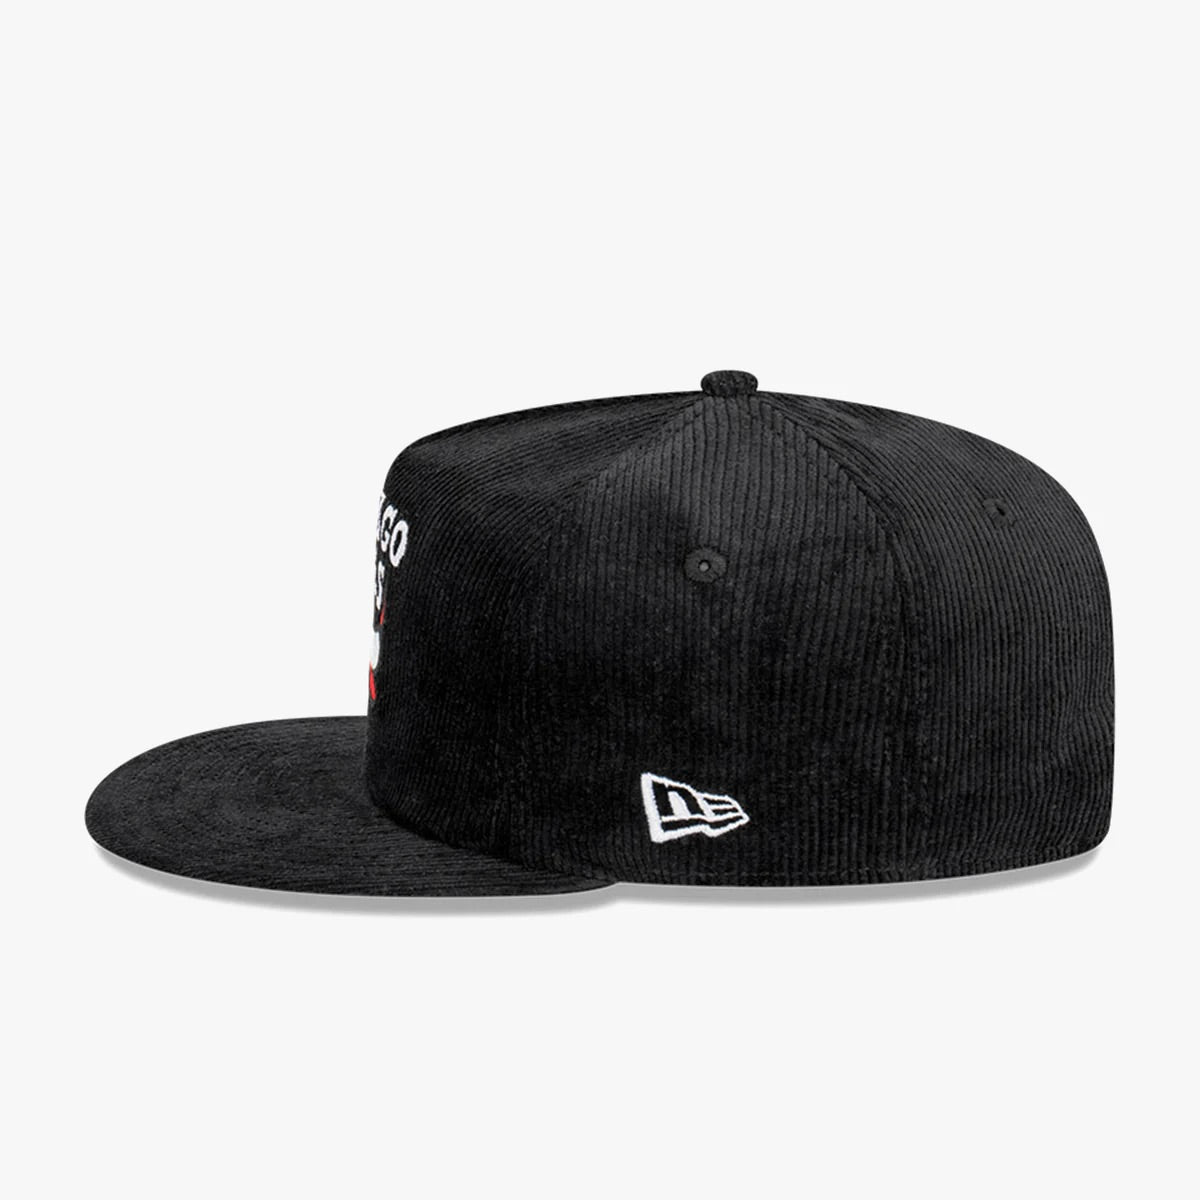 Chicago Bulls Hat - The Golfer Black Corduroy NBA Snapback Cap - New Era